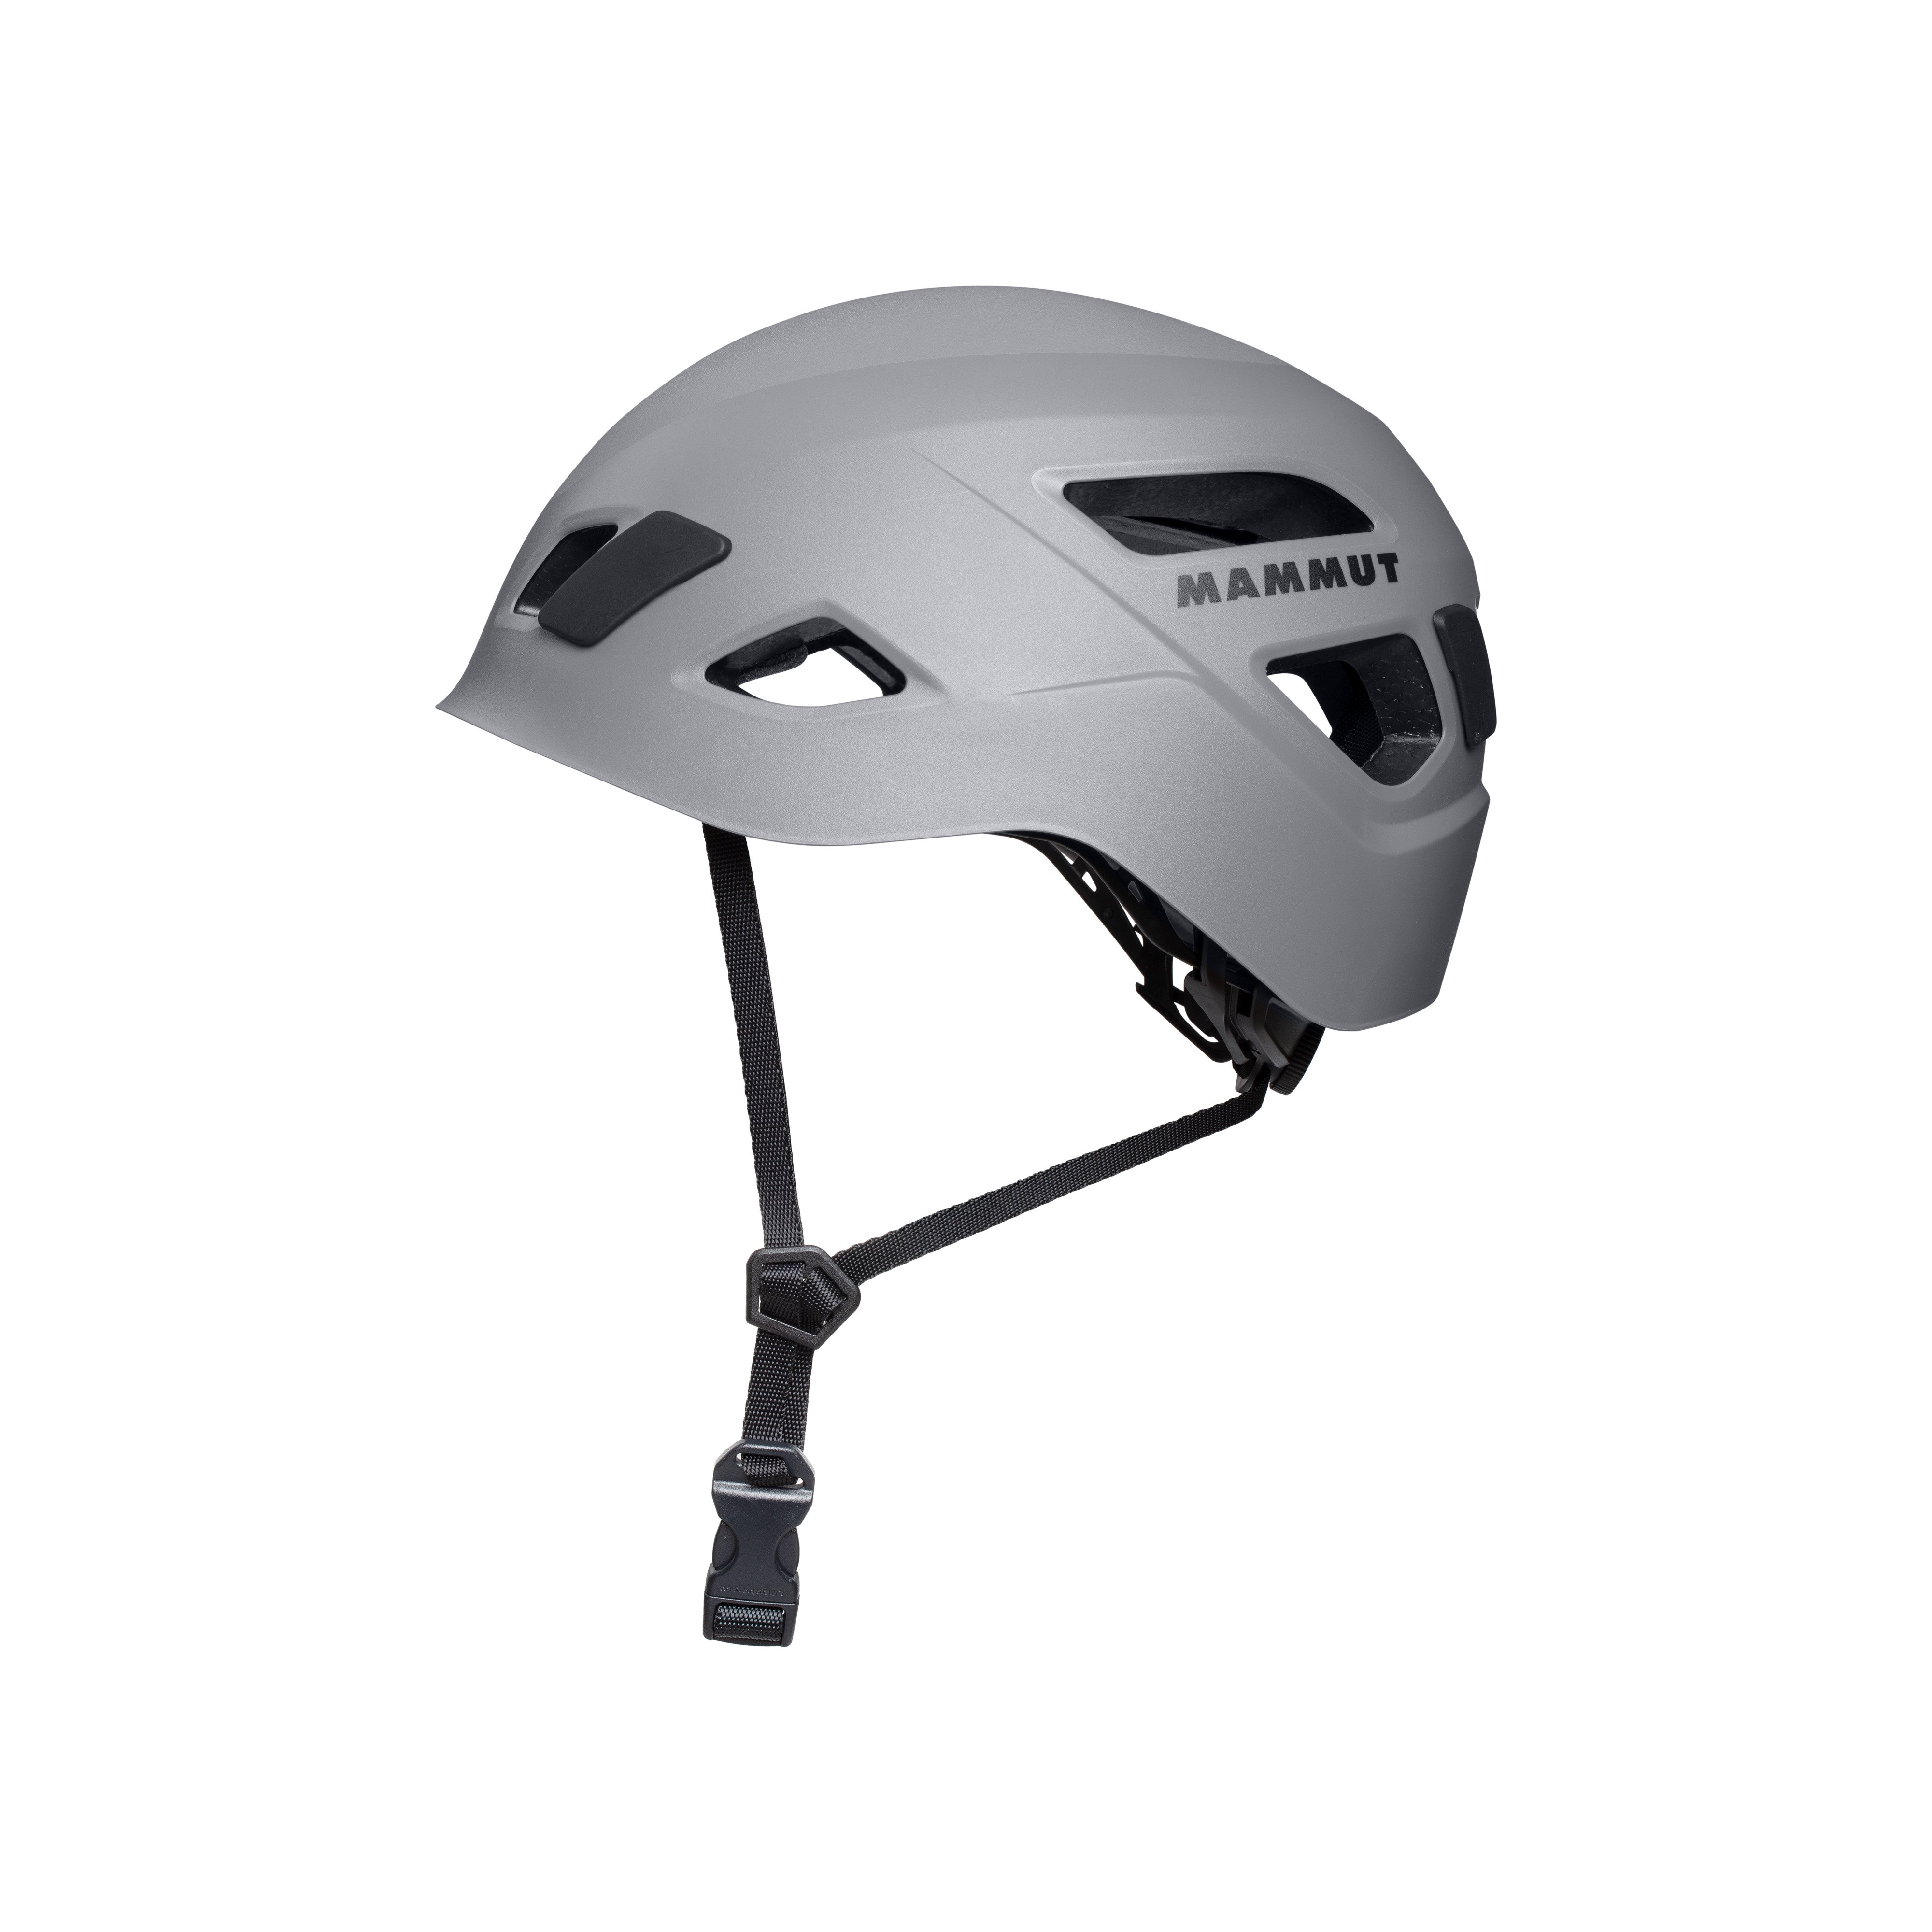 Skywalker 3.0 Helmet - titanium, one size product image